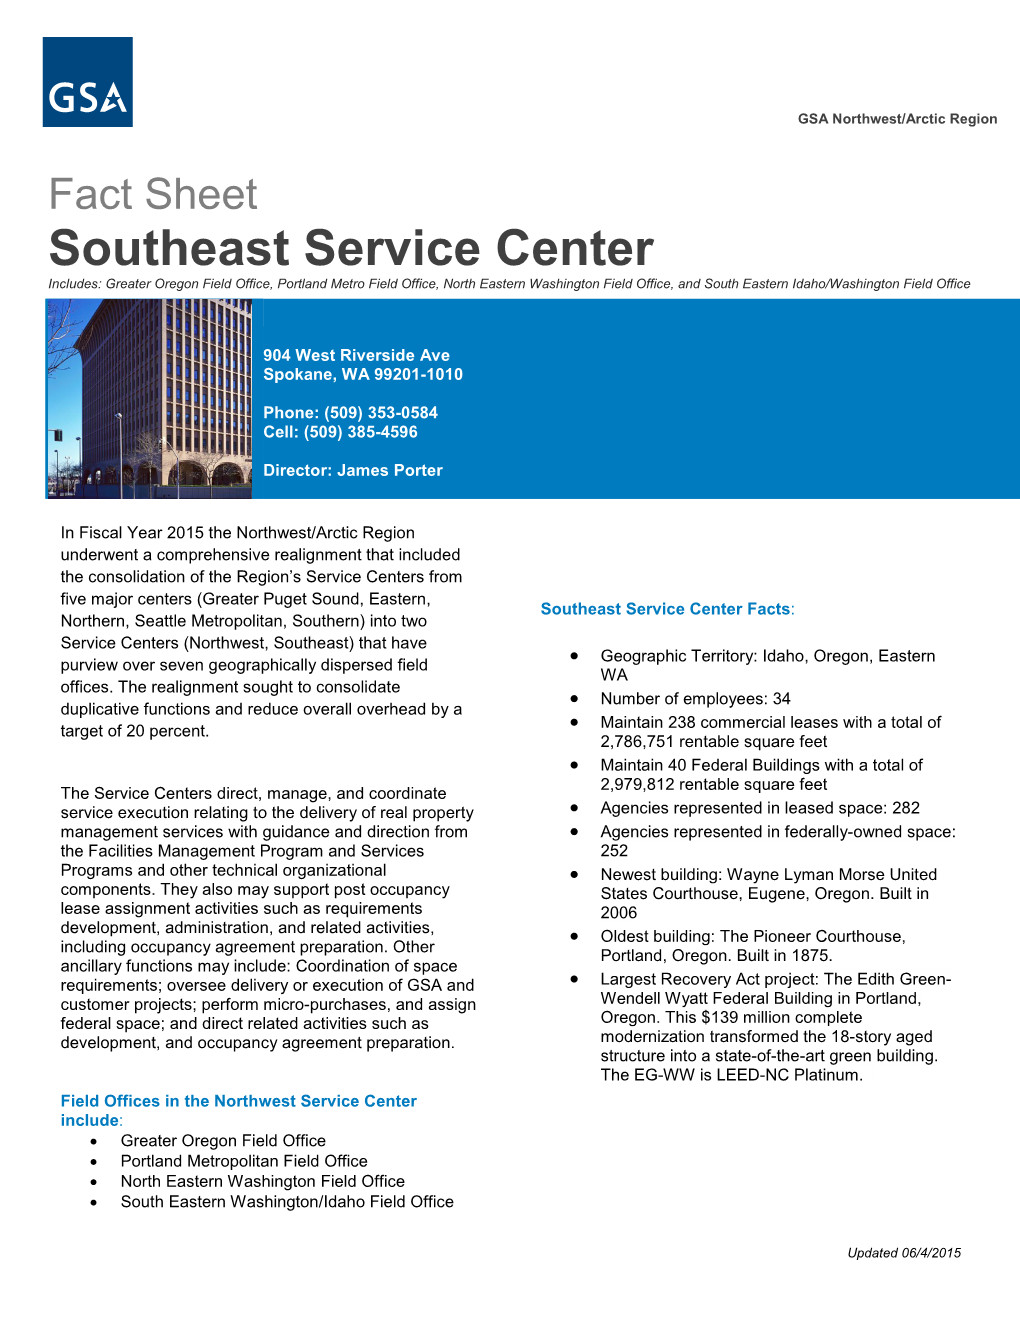 Southeast Service Center